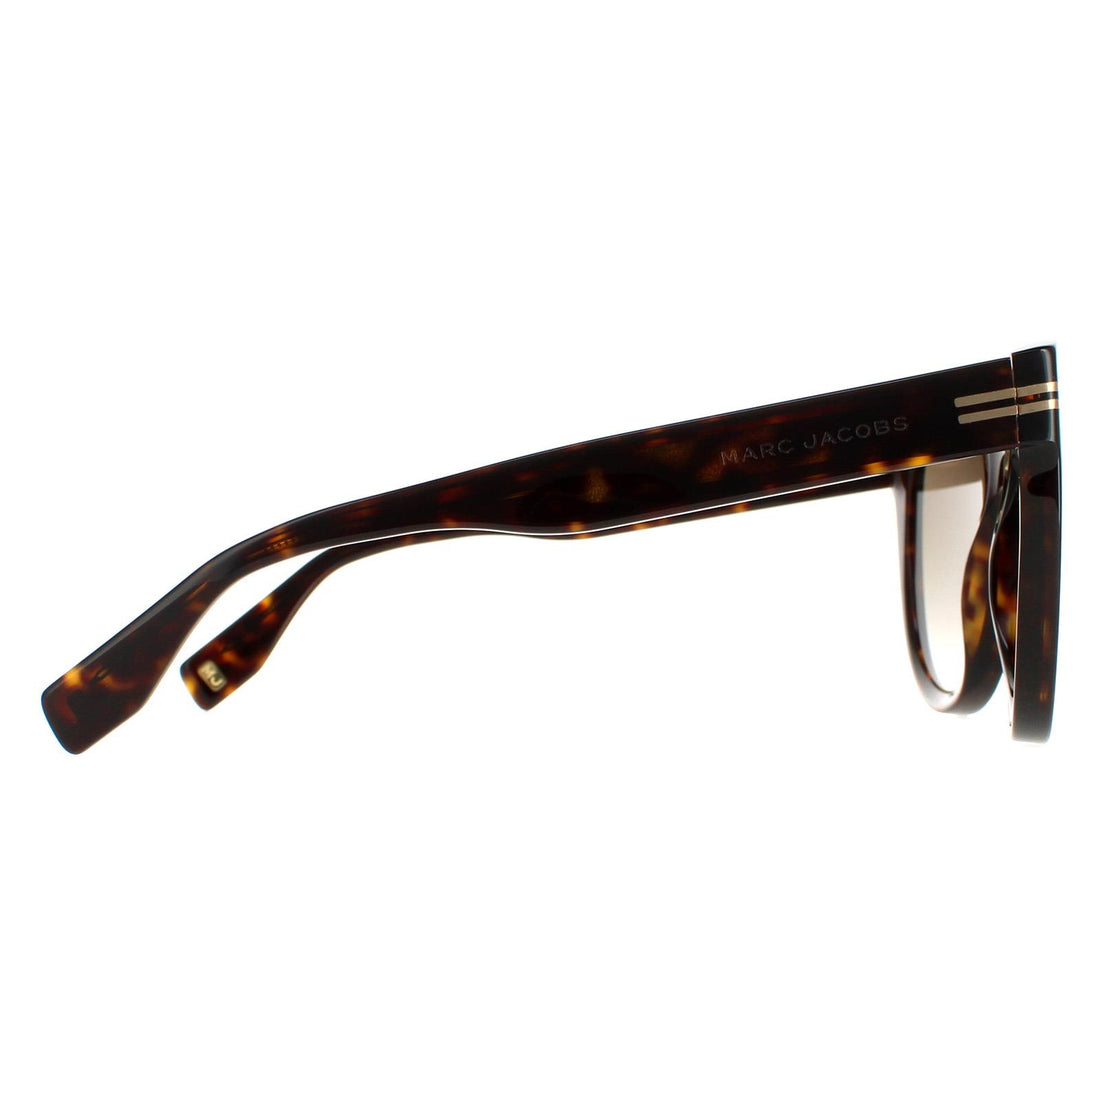 Marc Jacobs Sunglasses MJ 1011/S WR9 HA Clear Havana Brown Gradient